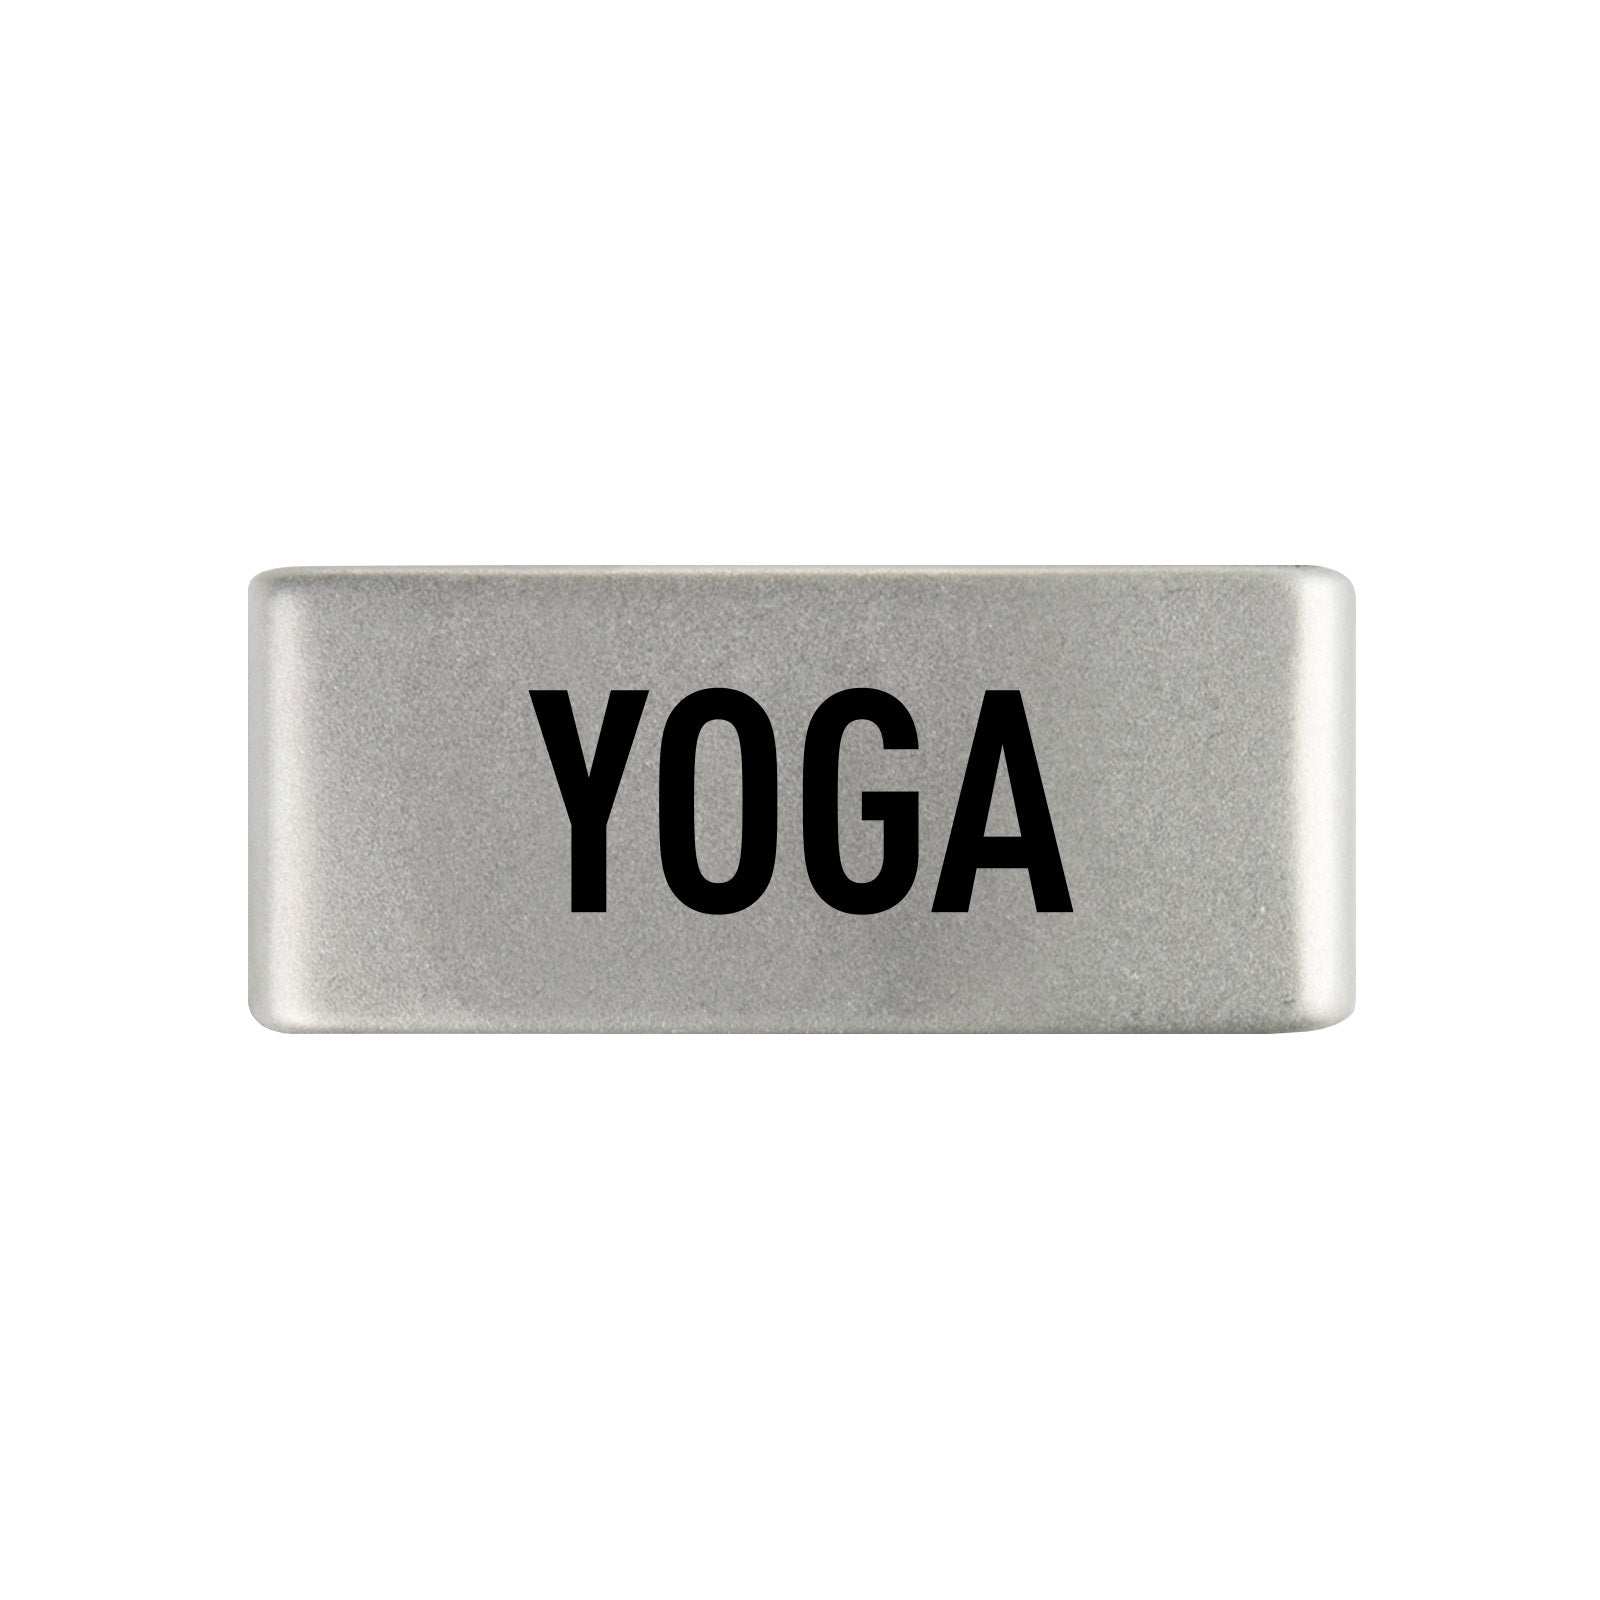 Yoga Badge Badge 13mm - ROAD iD